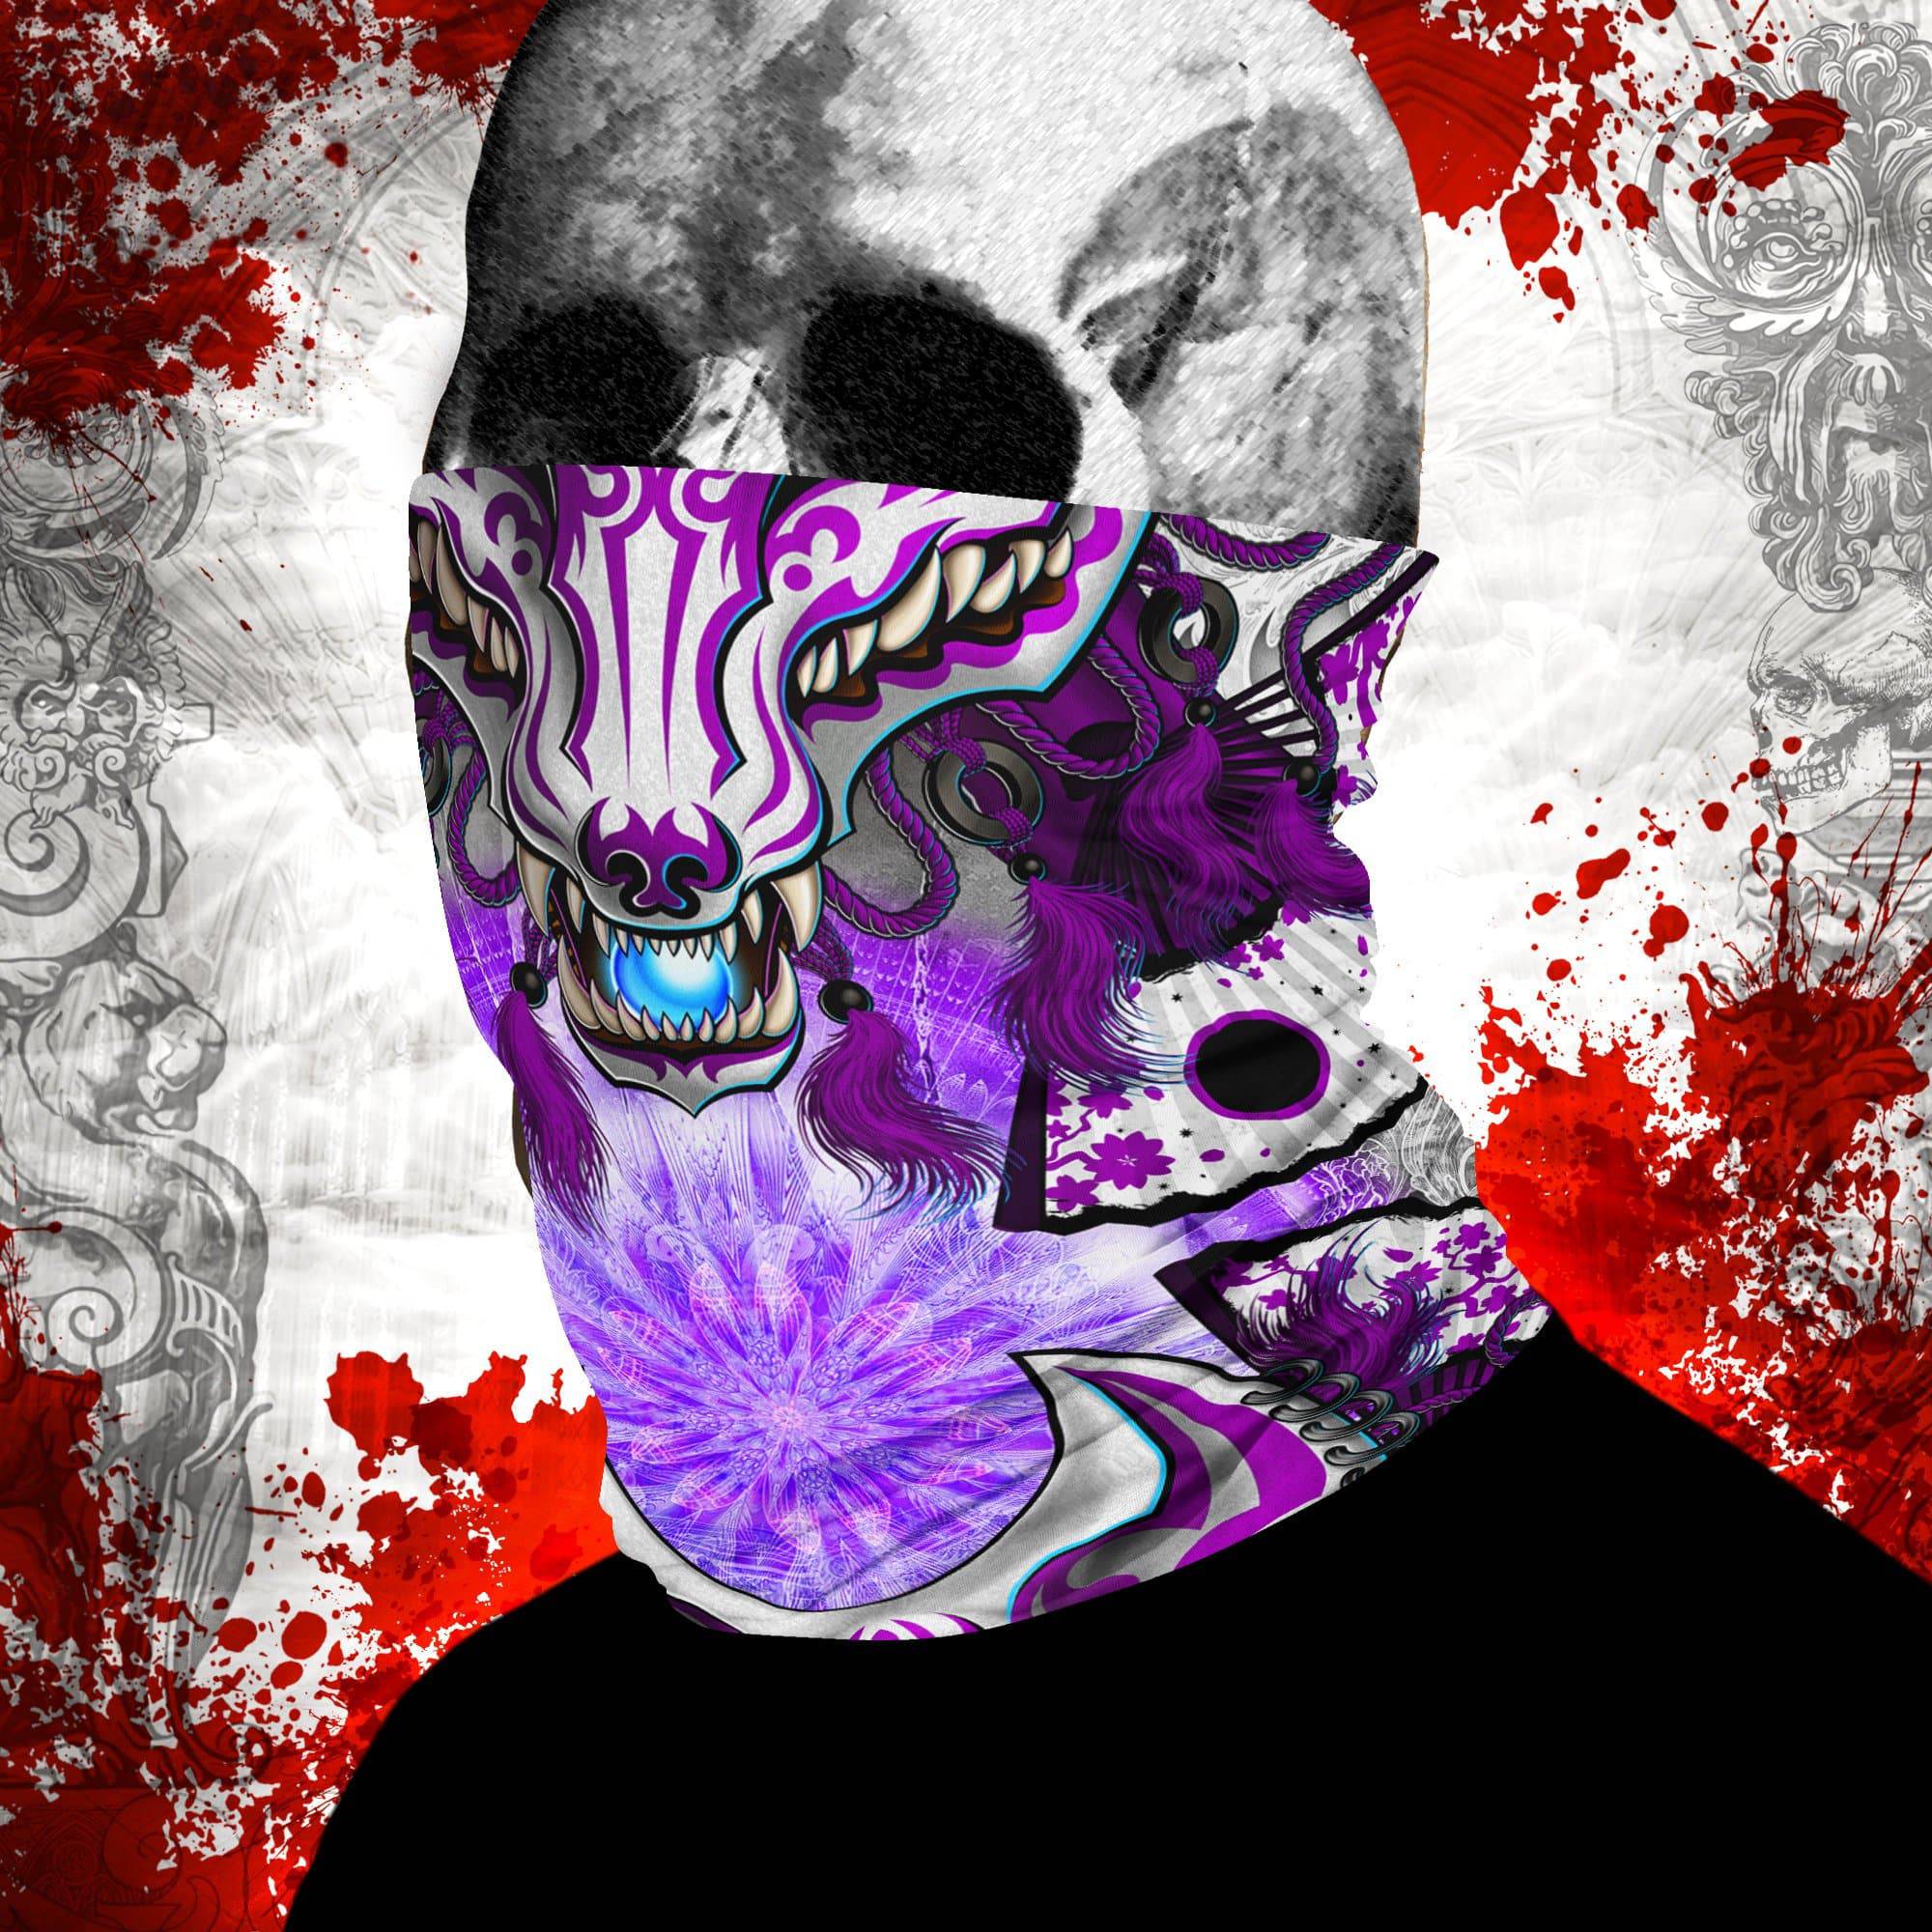 Kitsune Neck Gaiter, Face Mask, Head Covering, Japanese Fox, Okami, Anime and Gamer Gift - Pastel Goth, White & Purple - Abysm Internal